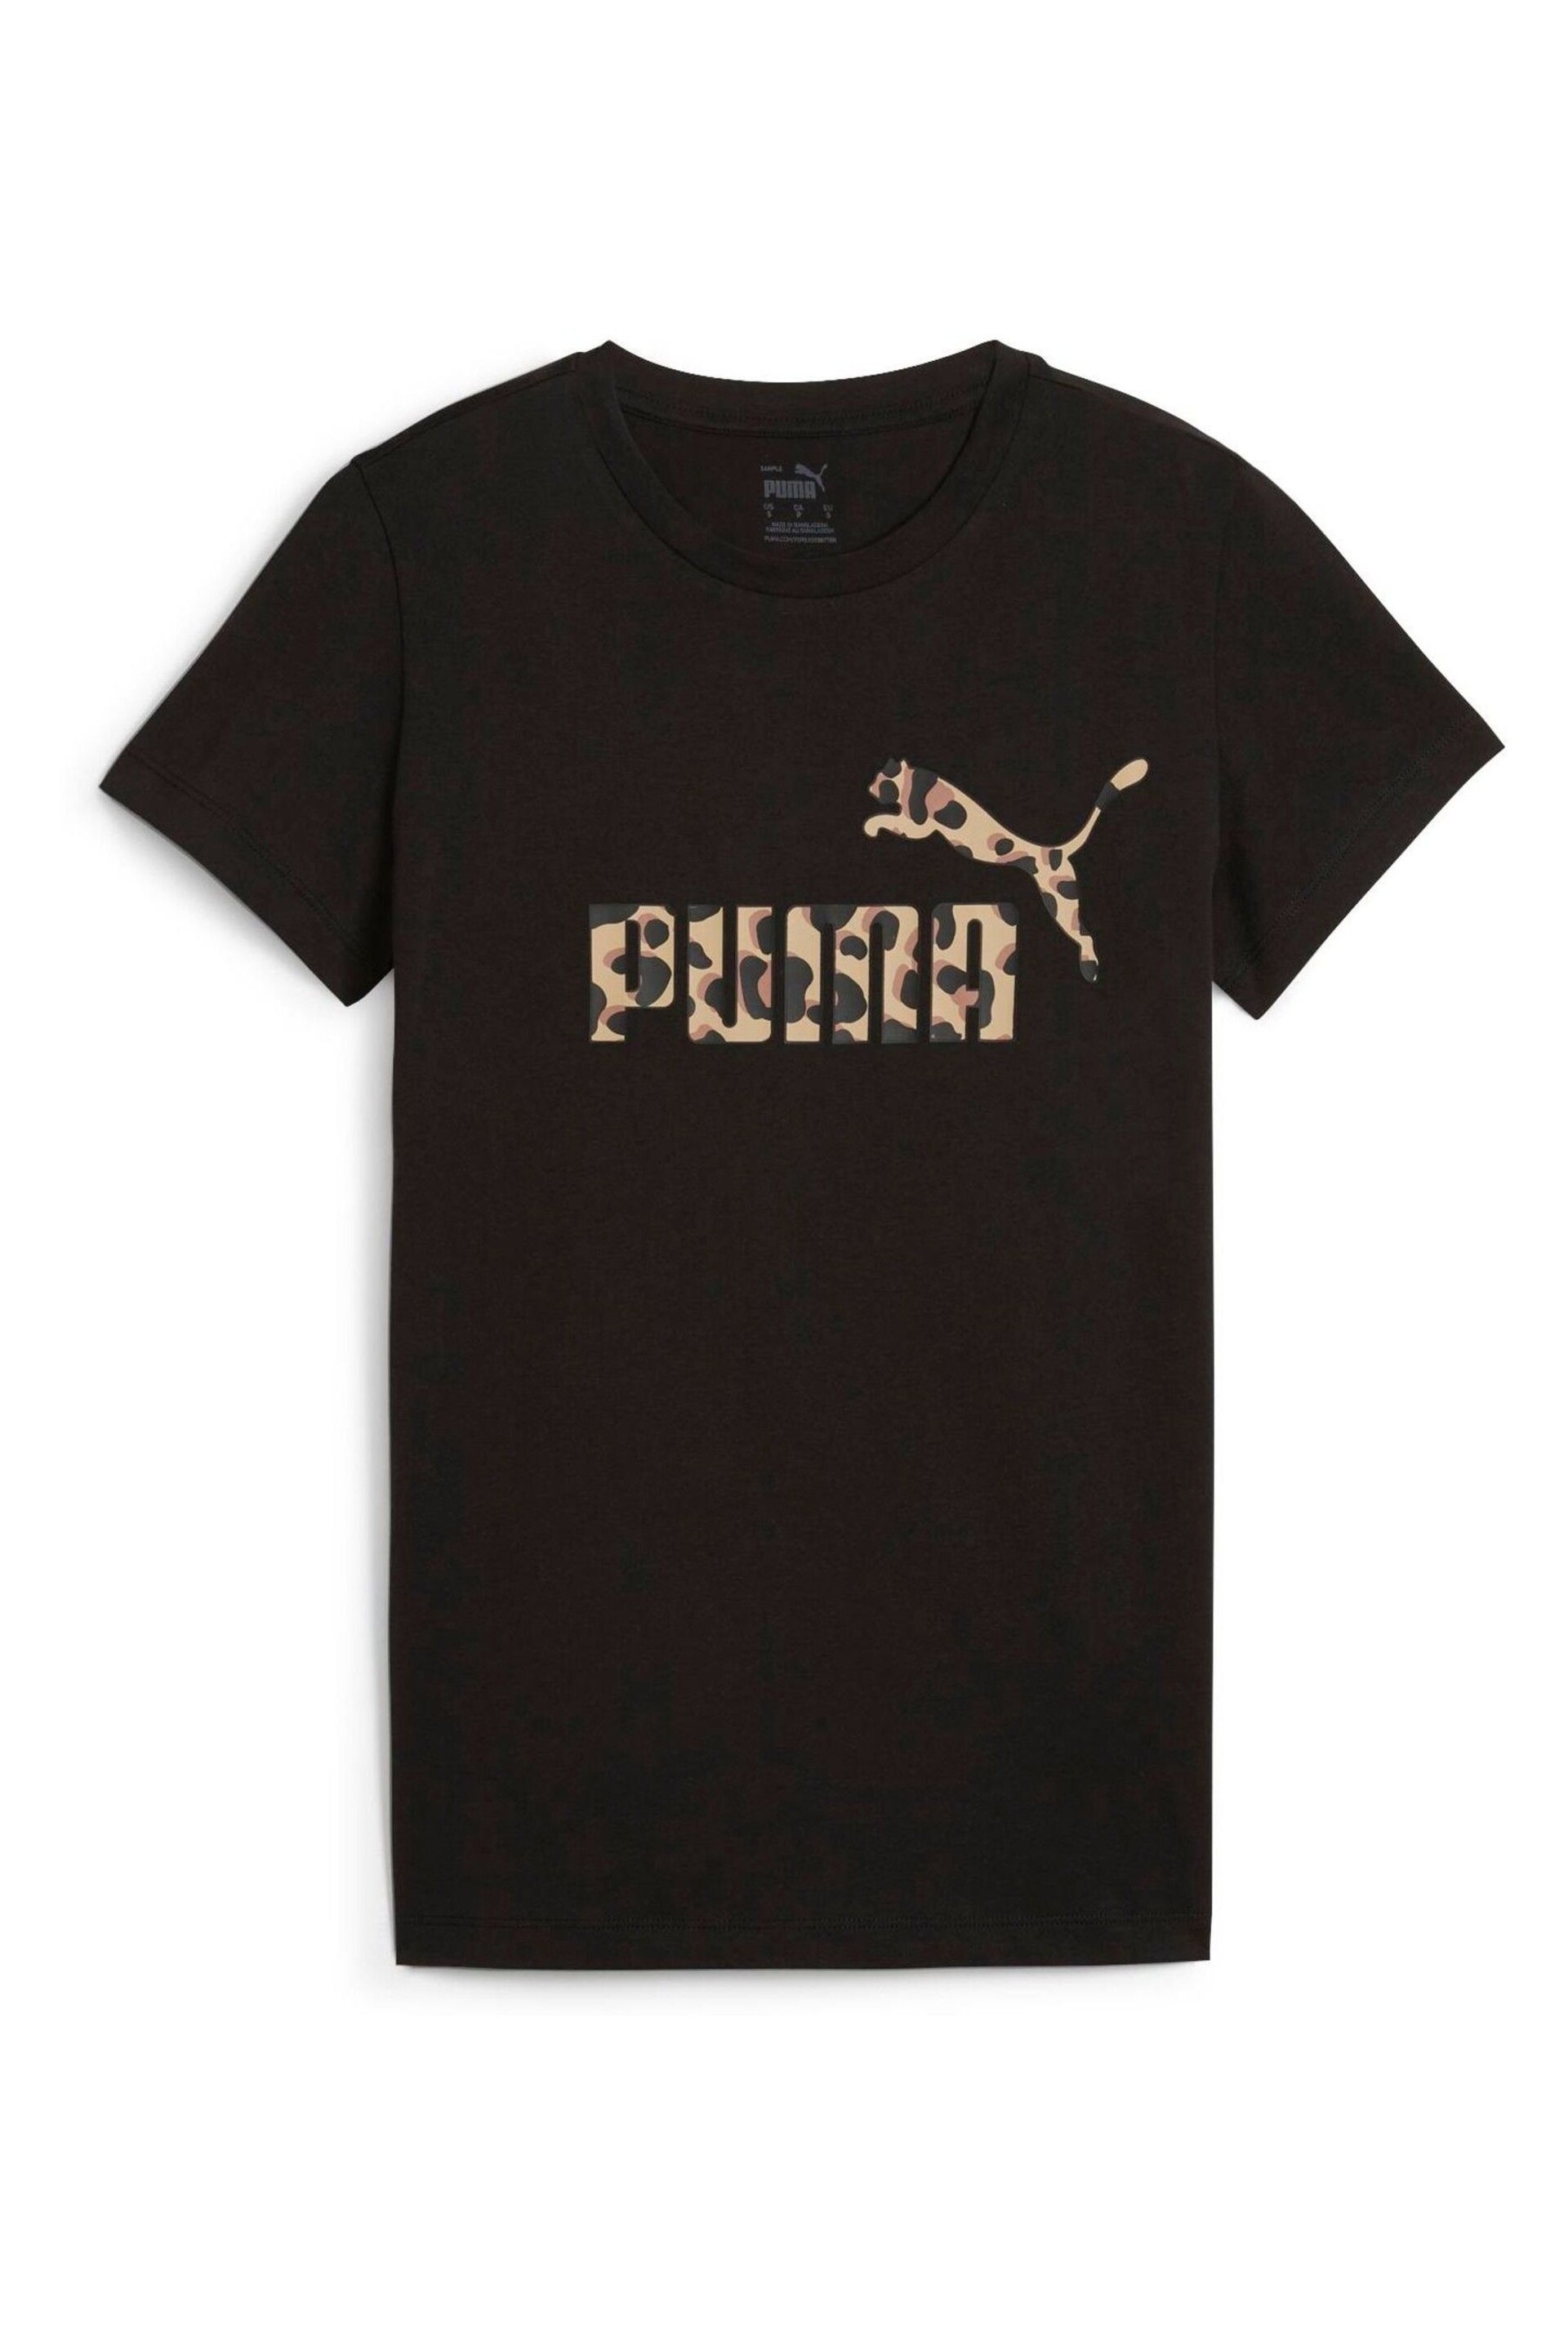 Puma Black ESS+ ANIMAL Graphic T-Shirt - Image 4 of 5